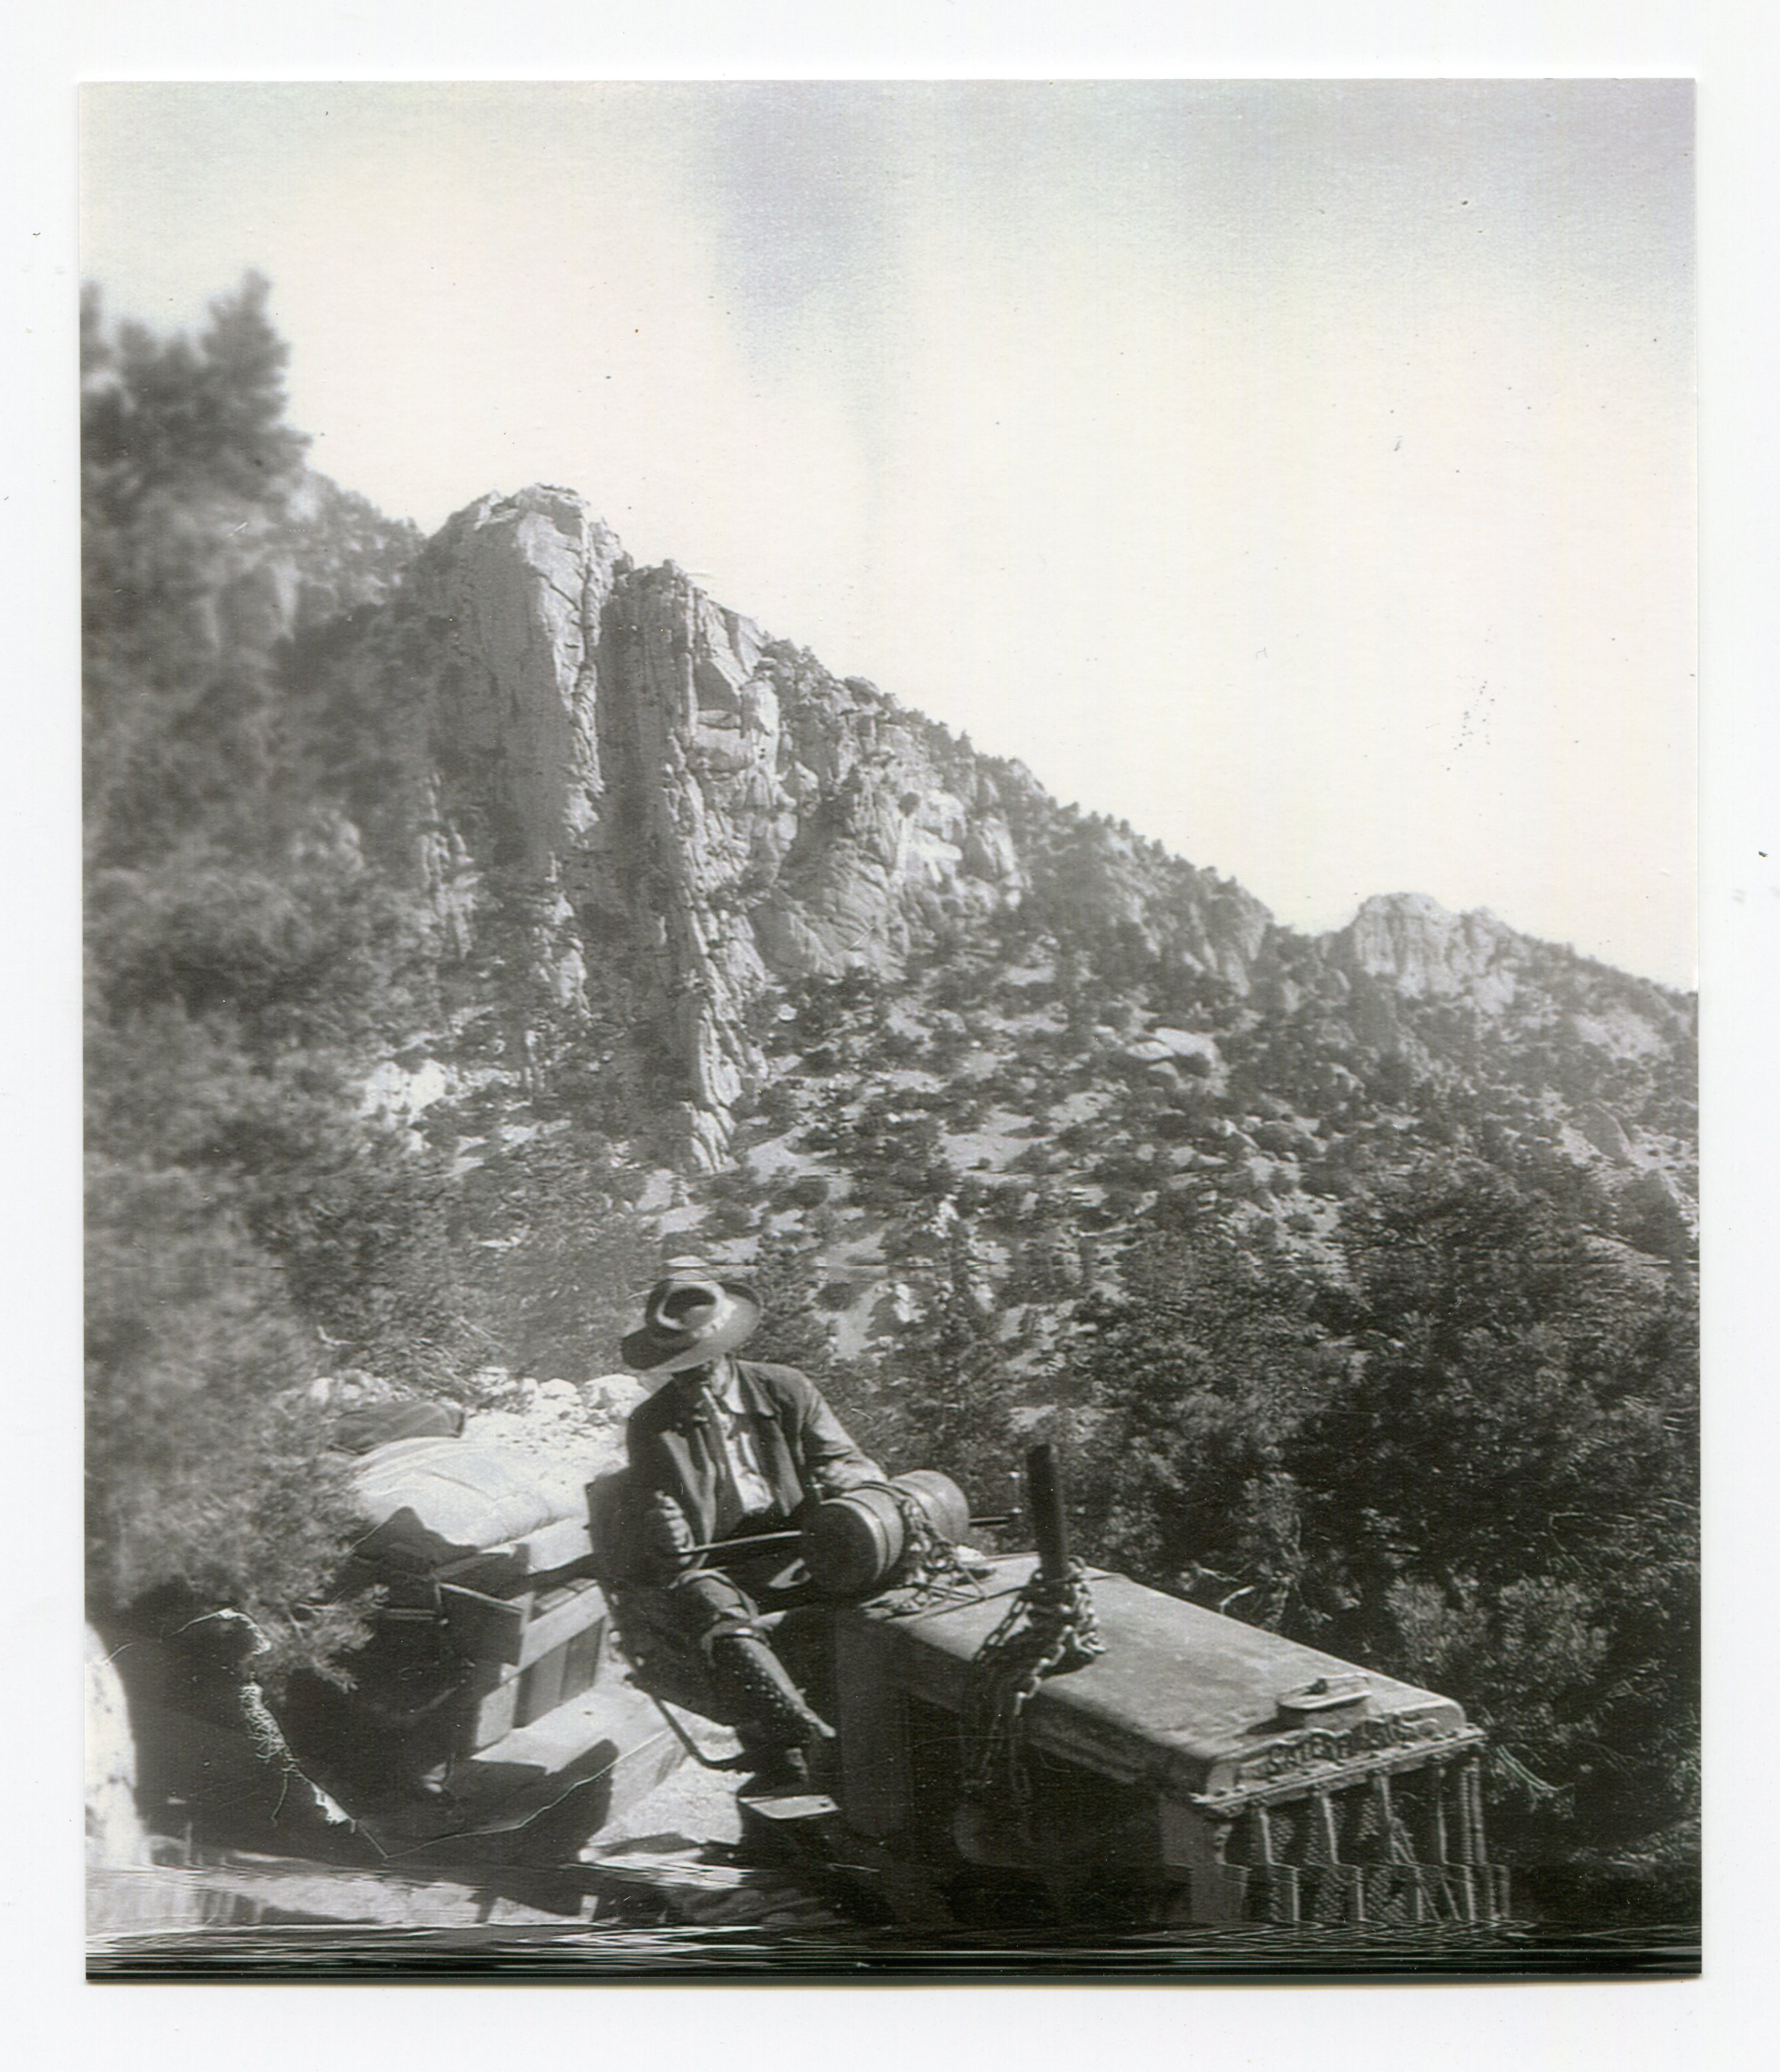 1947 Ashrama camp - Franklin on tractor